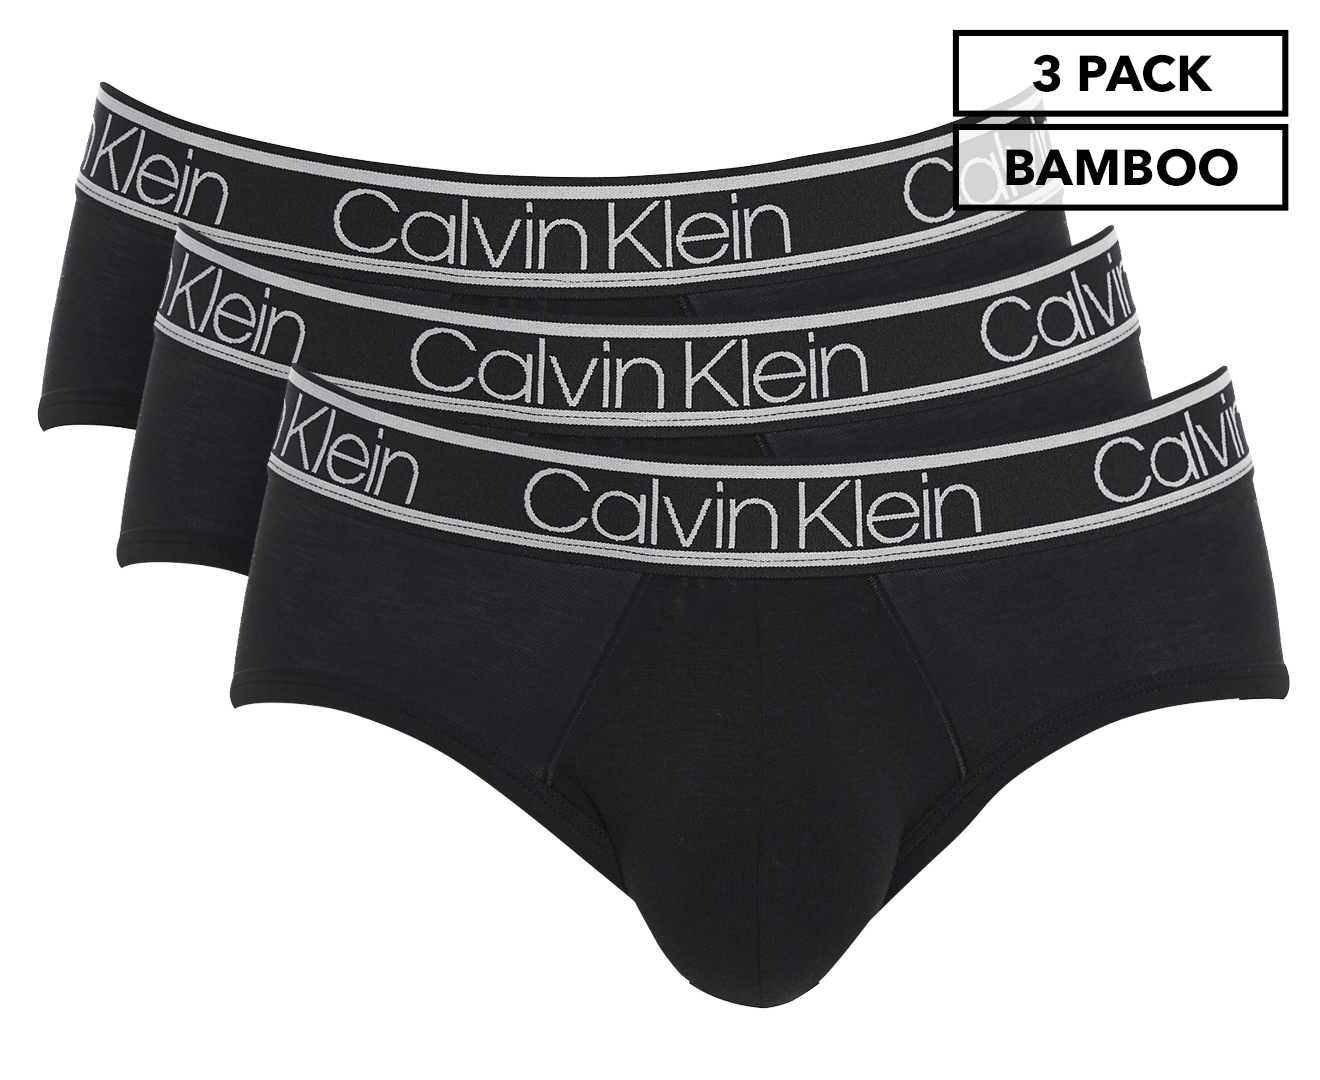 Calvin Klein Men's Bamboo Comfort Hip Briefs 3-Pack - Black 